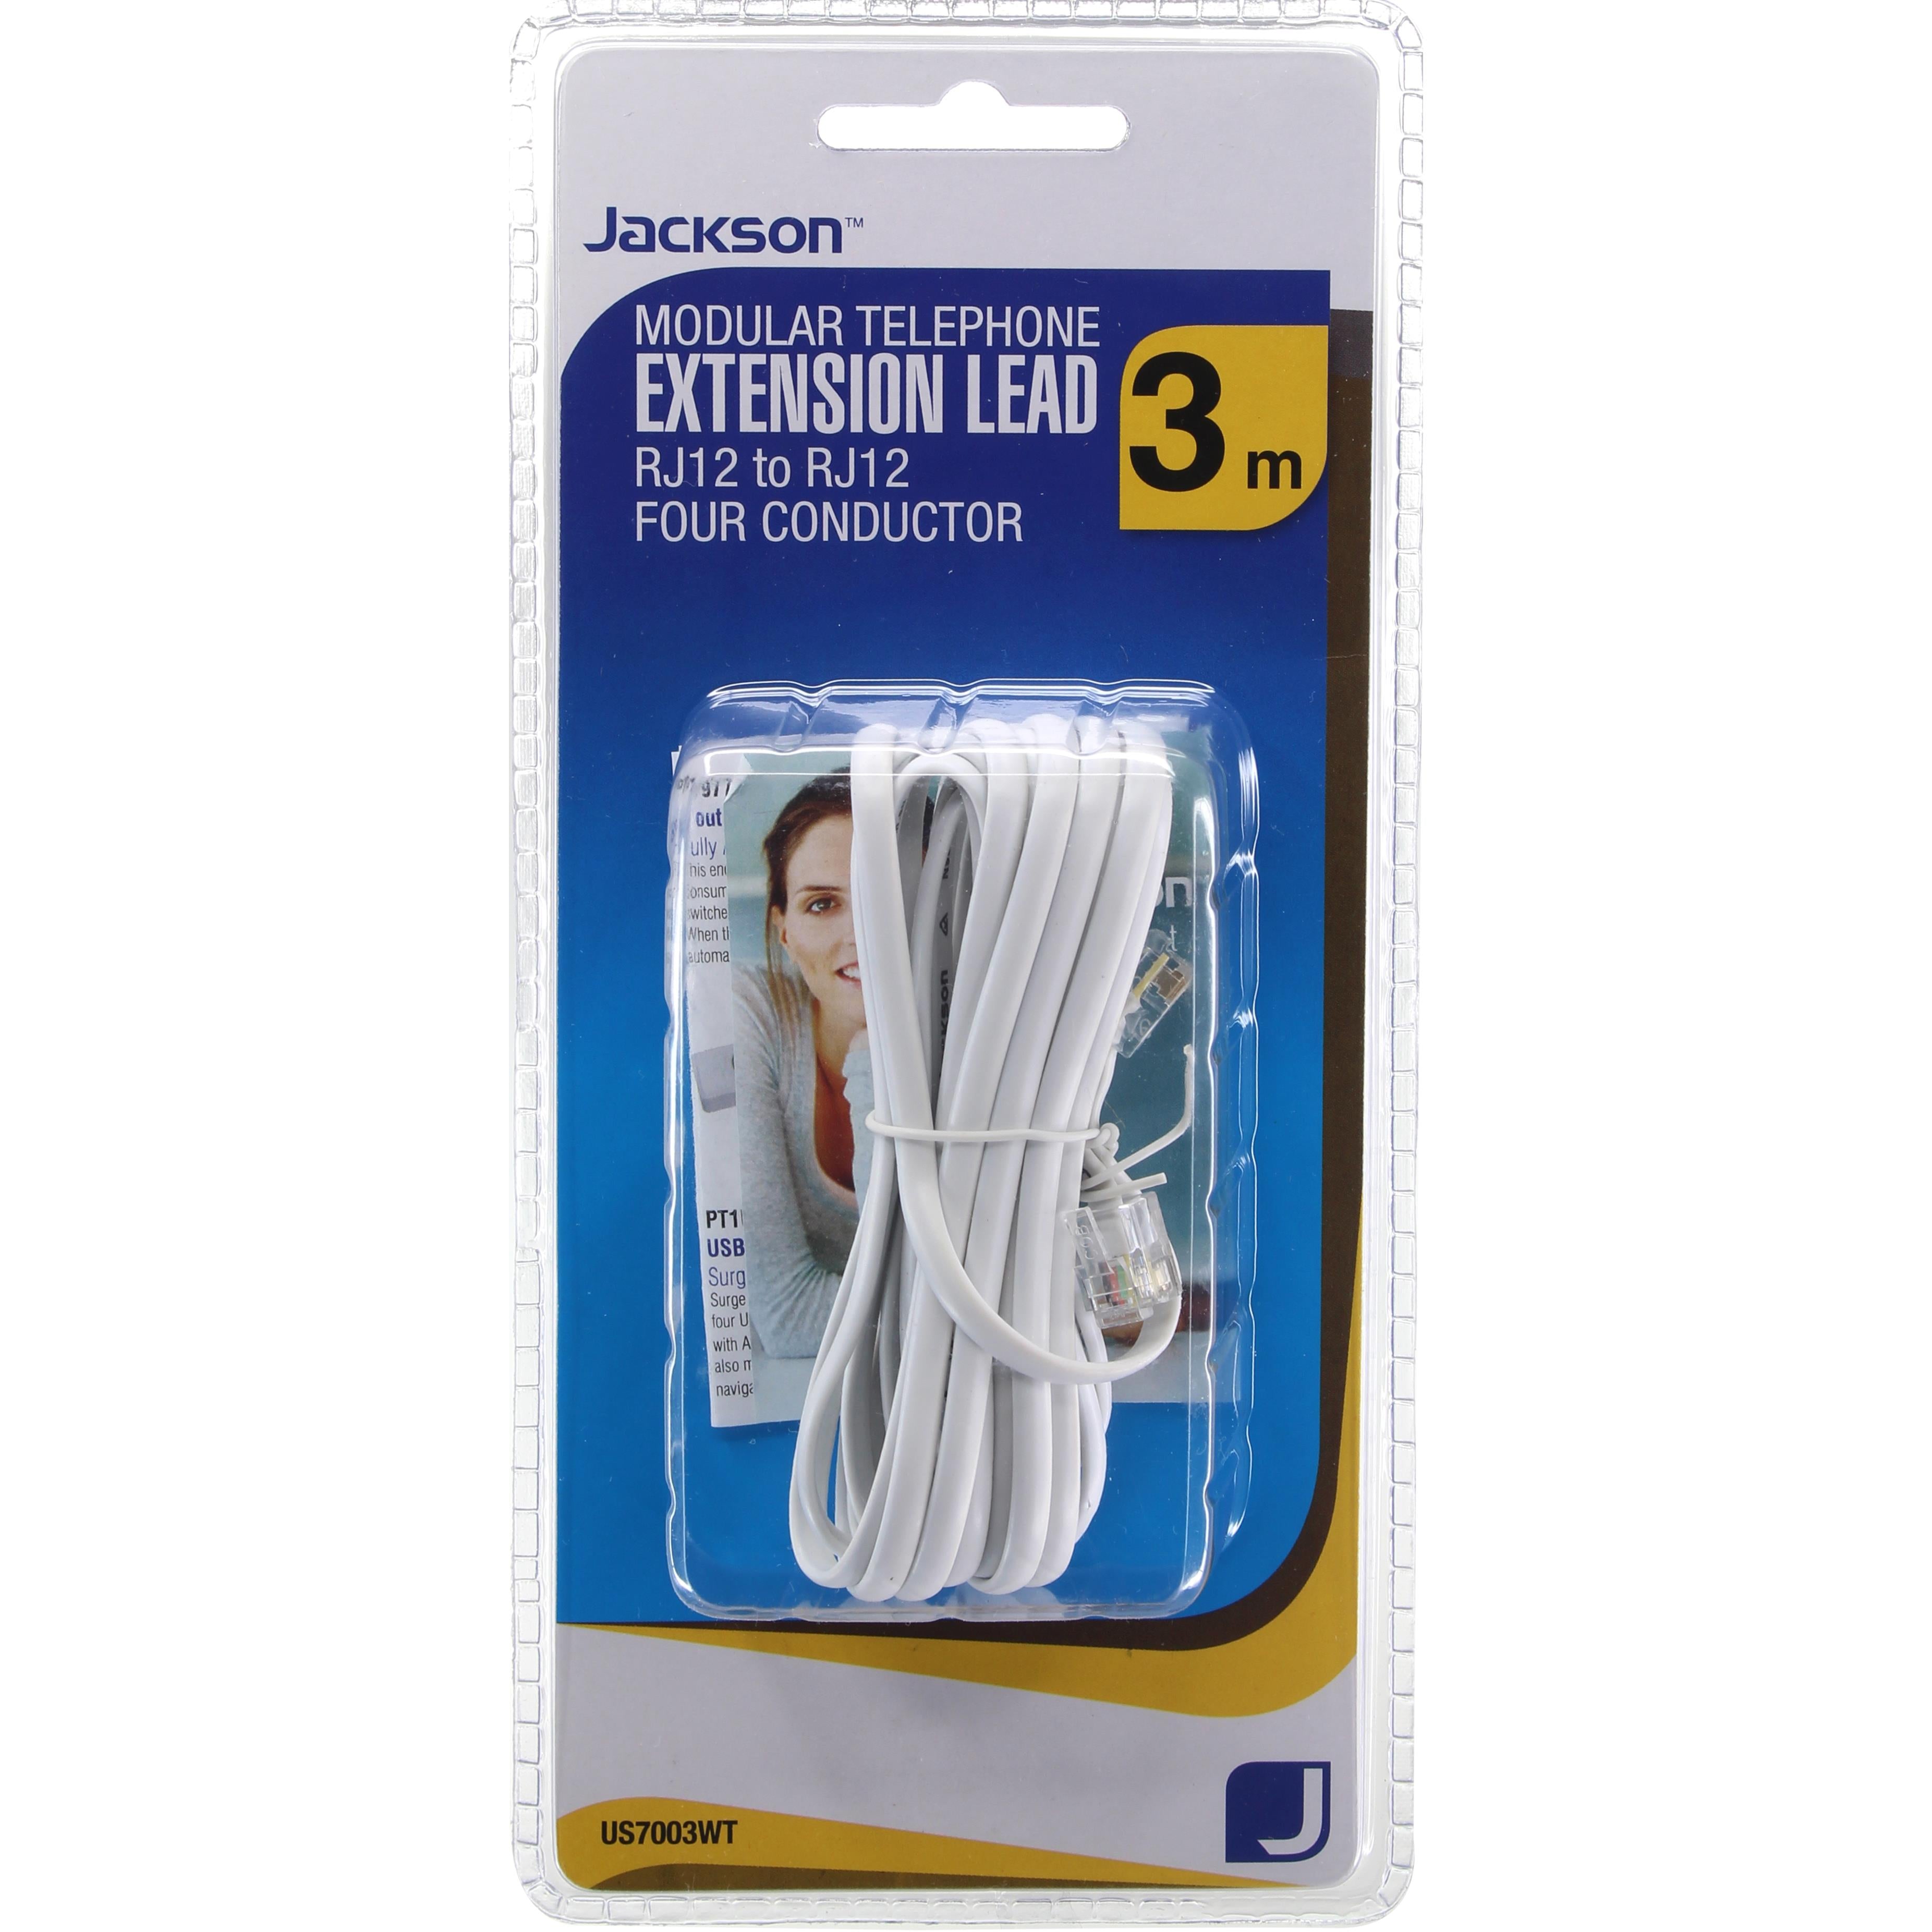 Jackson Modular Telephone Extension Lead 3m (White) - JB Hi-Fi